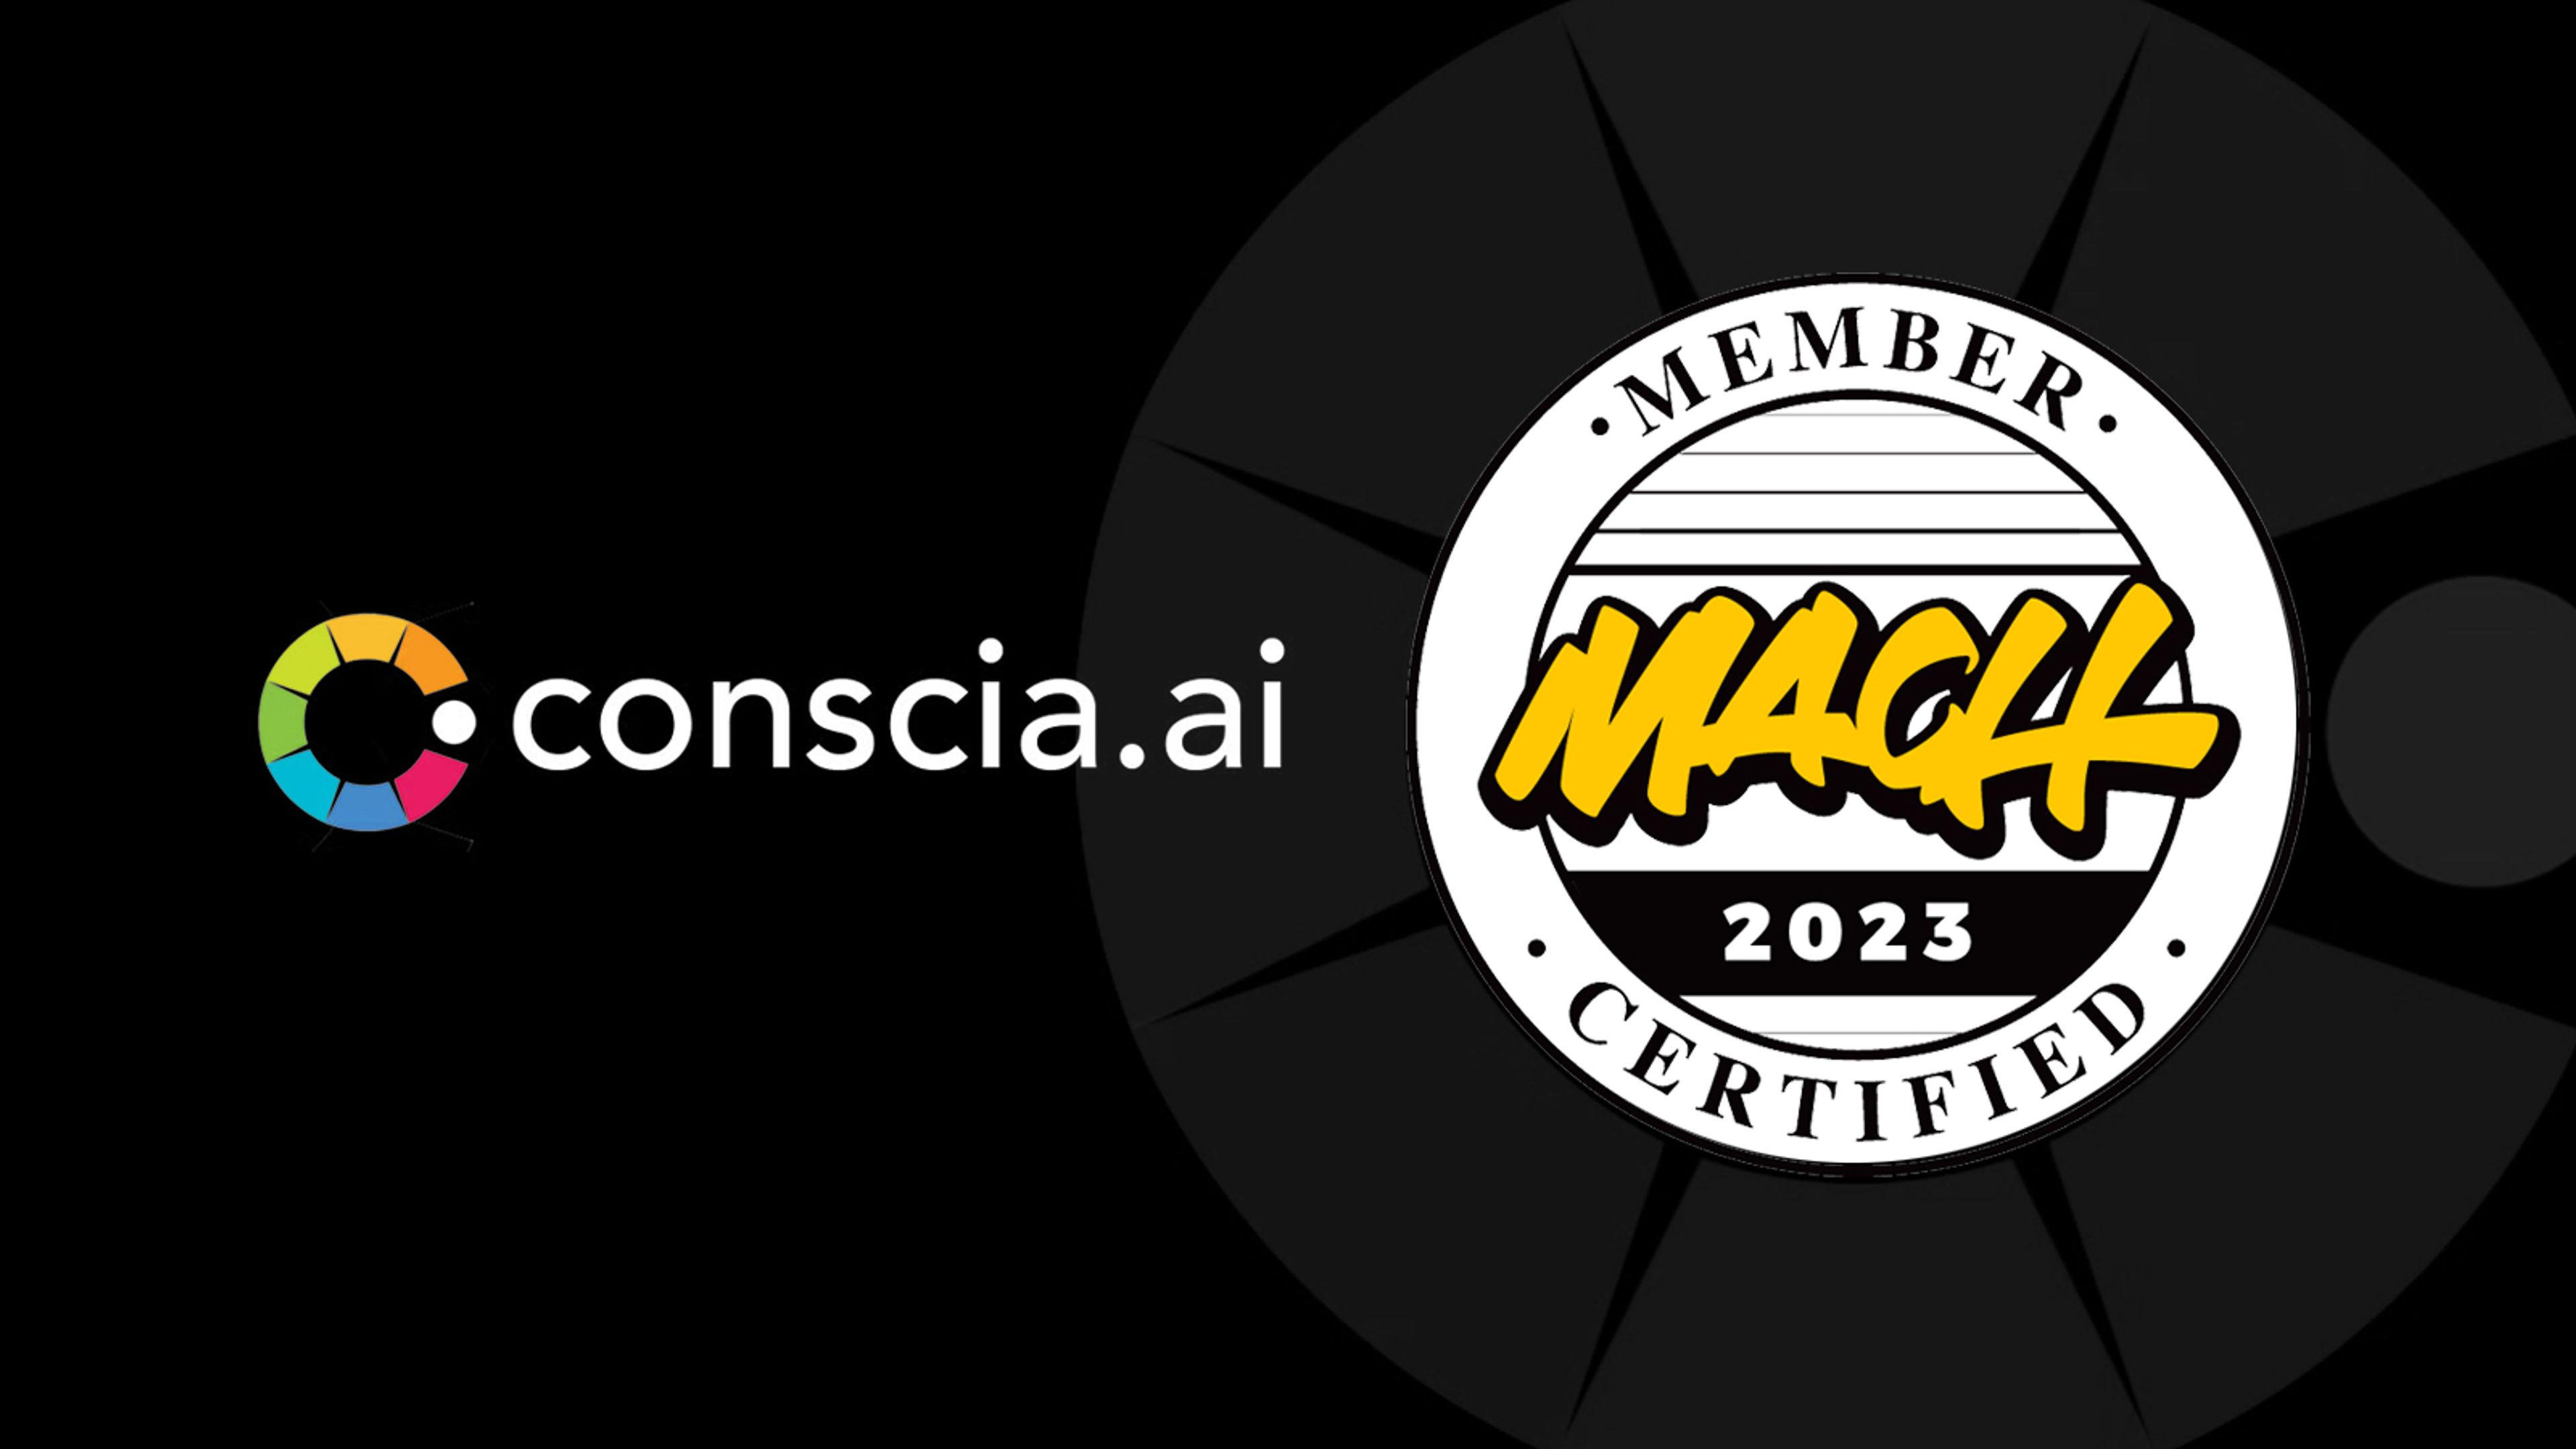 Conscia.ai logo and MACH Certified badge 